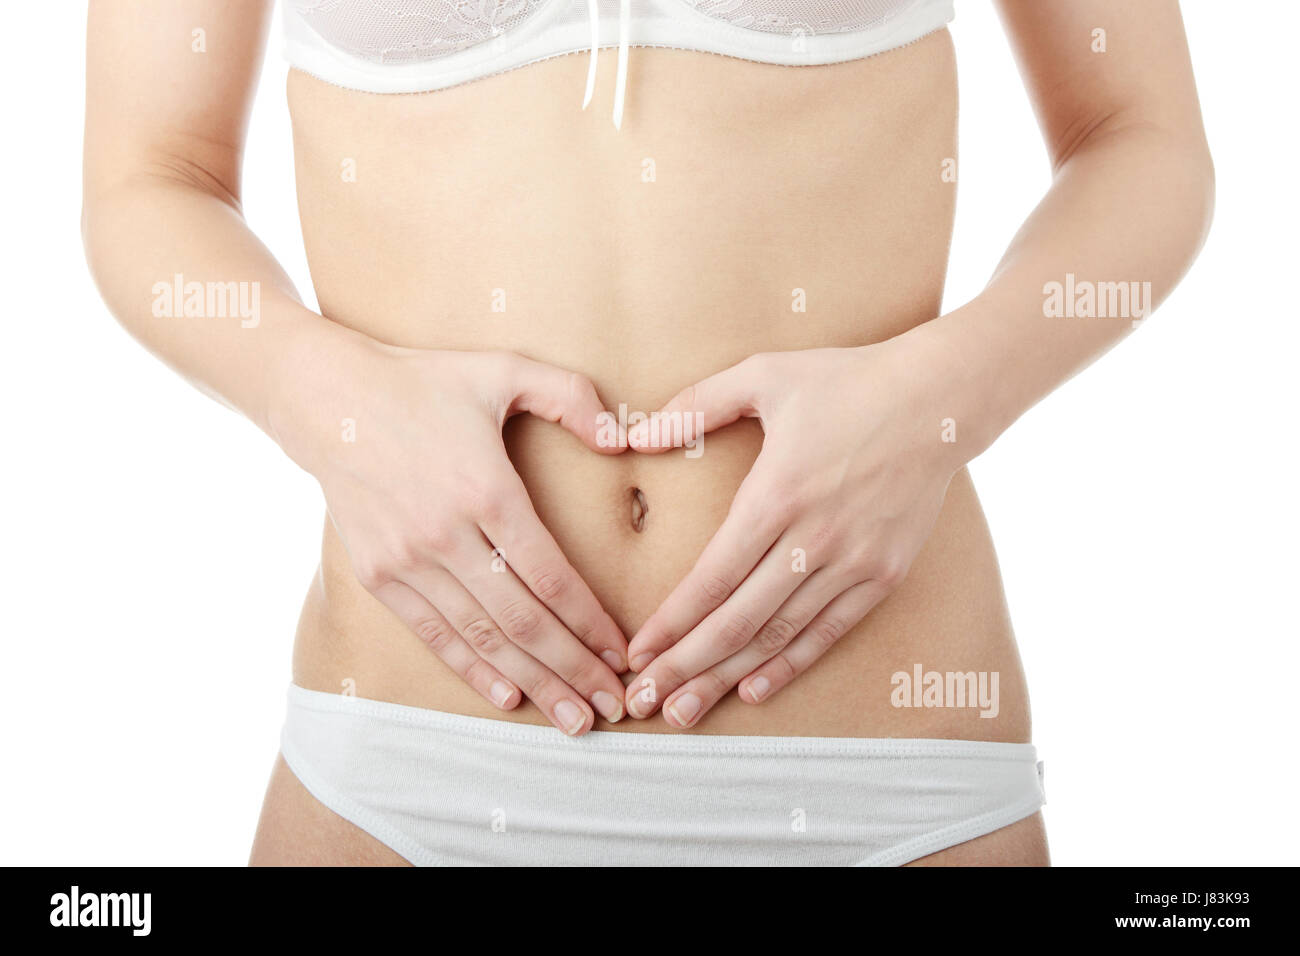 Woman flat stomach bikini hi-res stock photography and images - Alamy